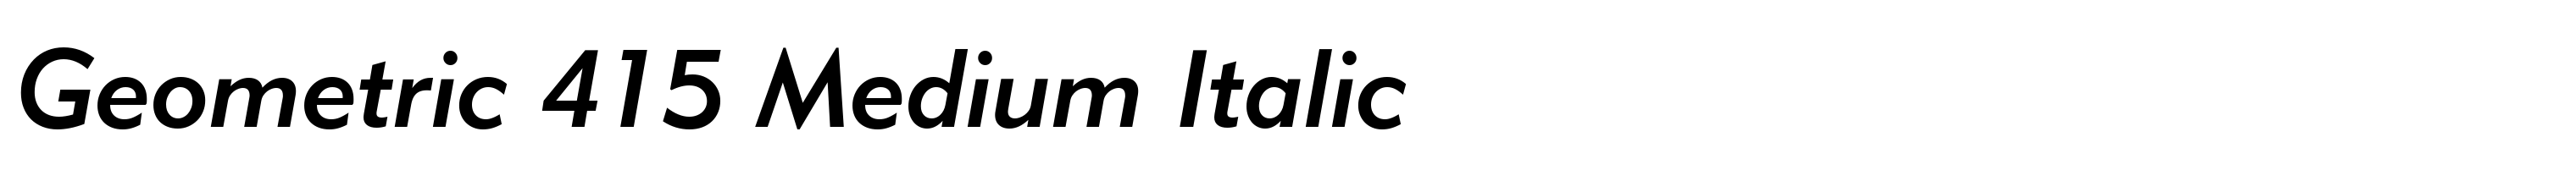 Geometric 415 Medium Italic